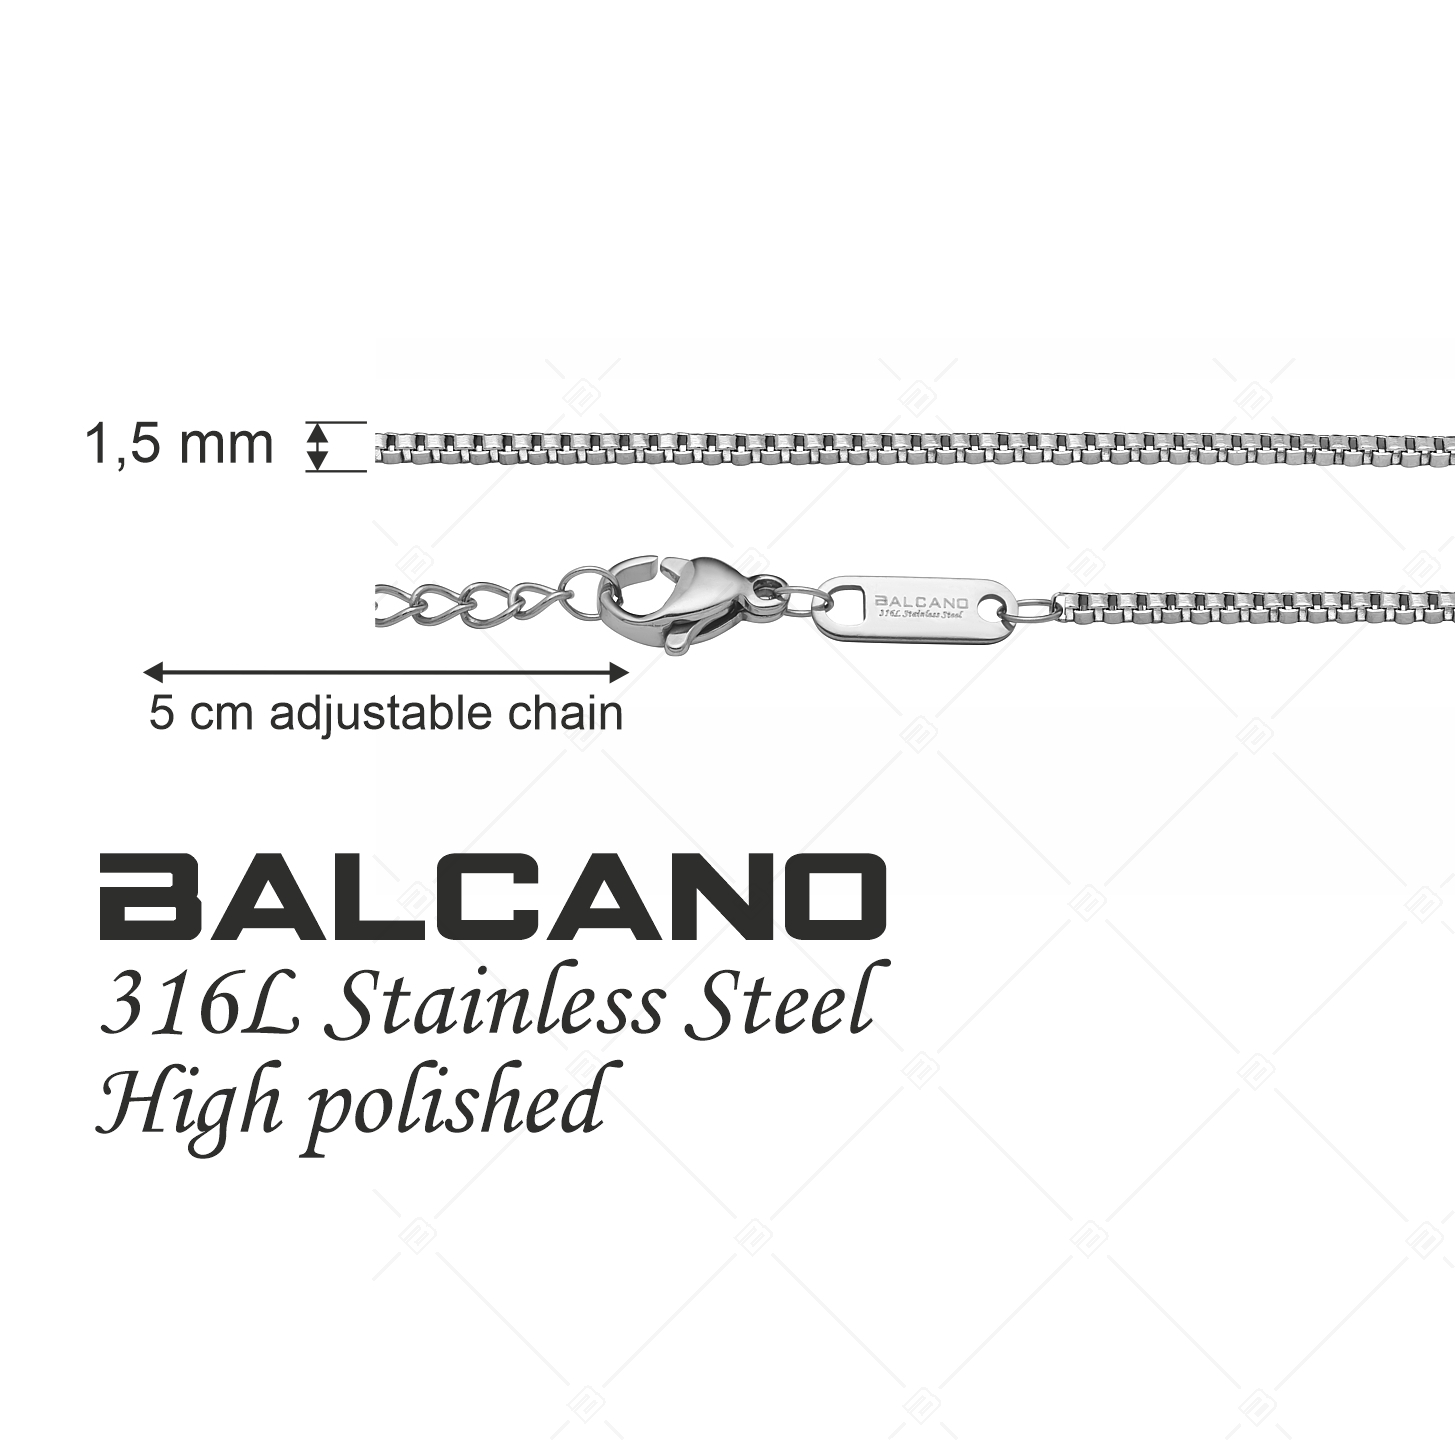 BALCANO - Venetian / Stainless Steel Venetian Chain, High Polished - 1,5 mm (341292BC97)